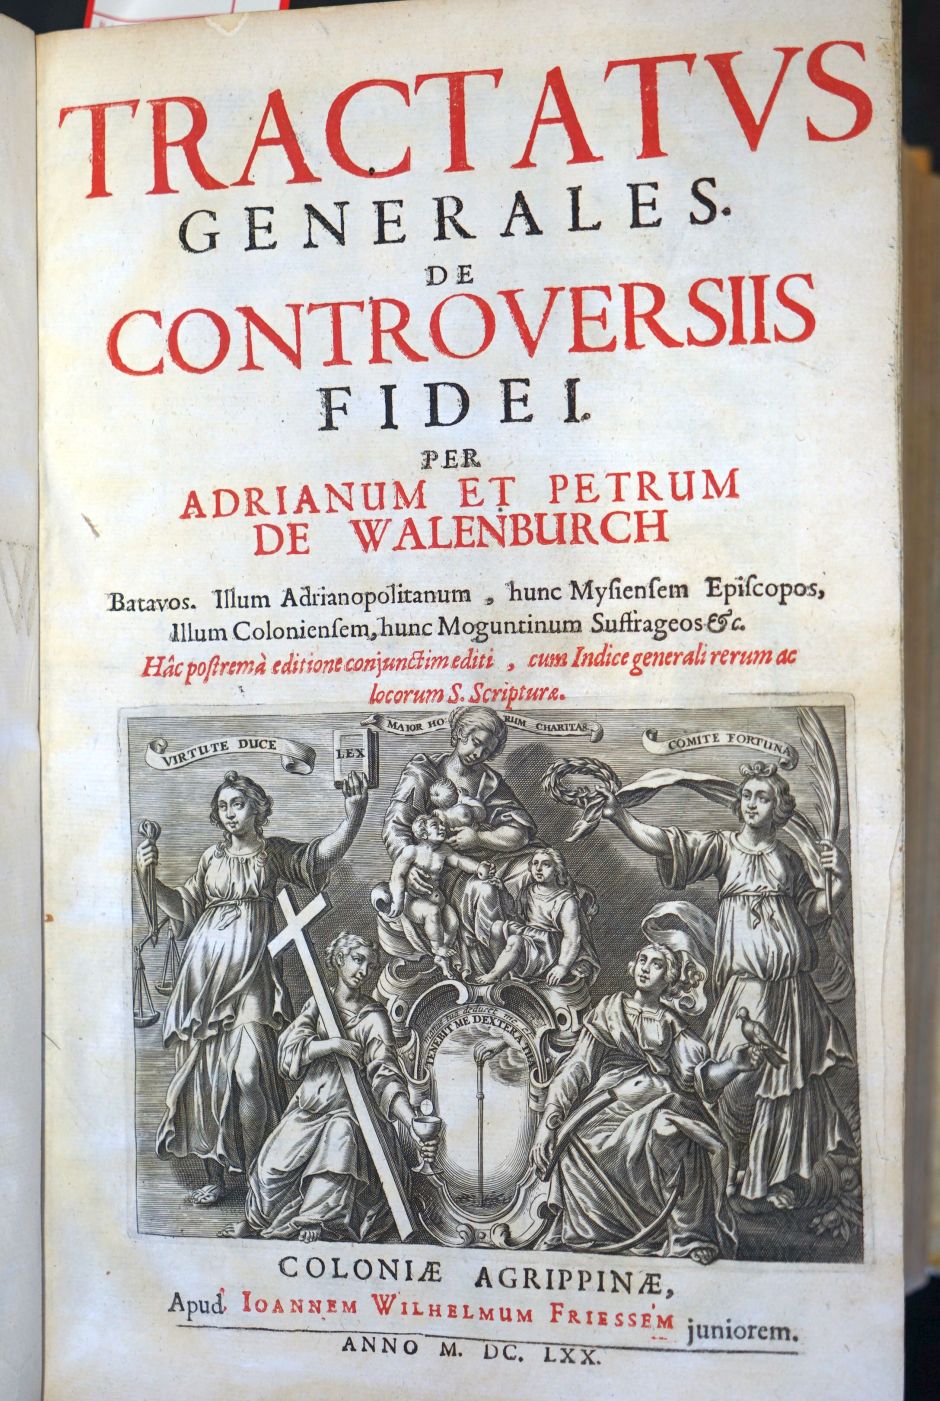 Lot 1340, Auction  115, Walenburch, Adrian van und Walenburch, Peter van, Tractatus generales de controversiis Fidei